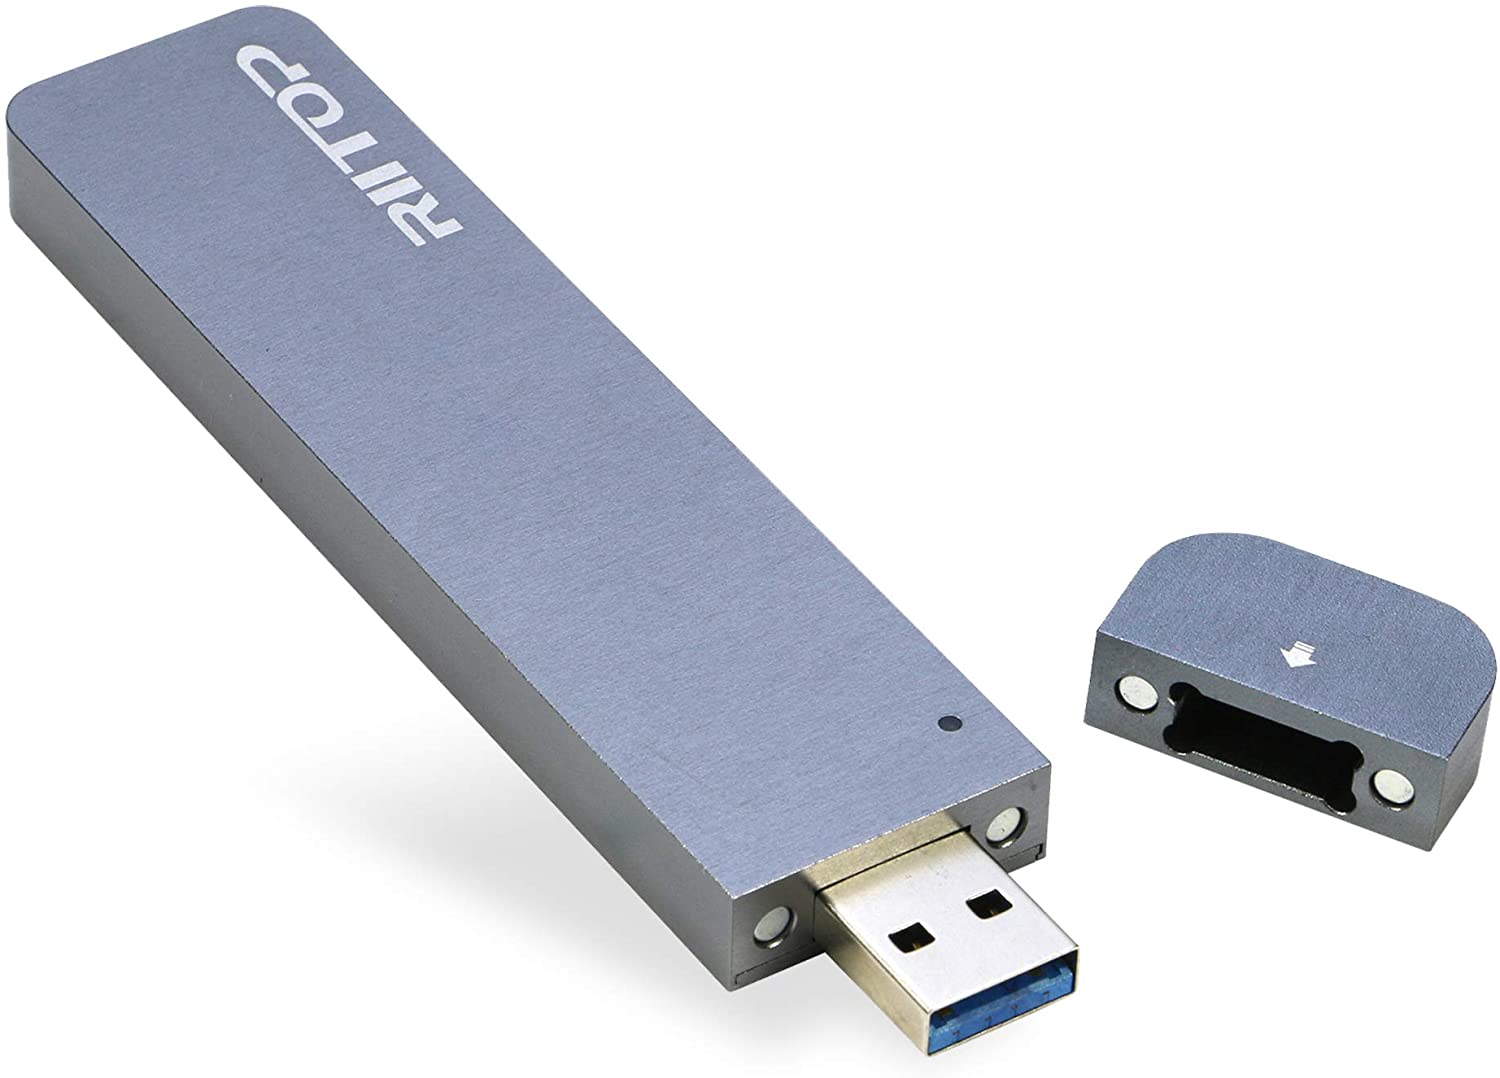 M.2 NGFF NVMe SSD USB Enclosure Case Adapter, RIITOP B Key and M Key M